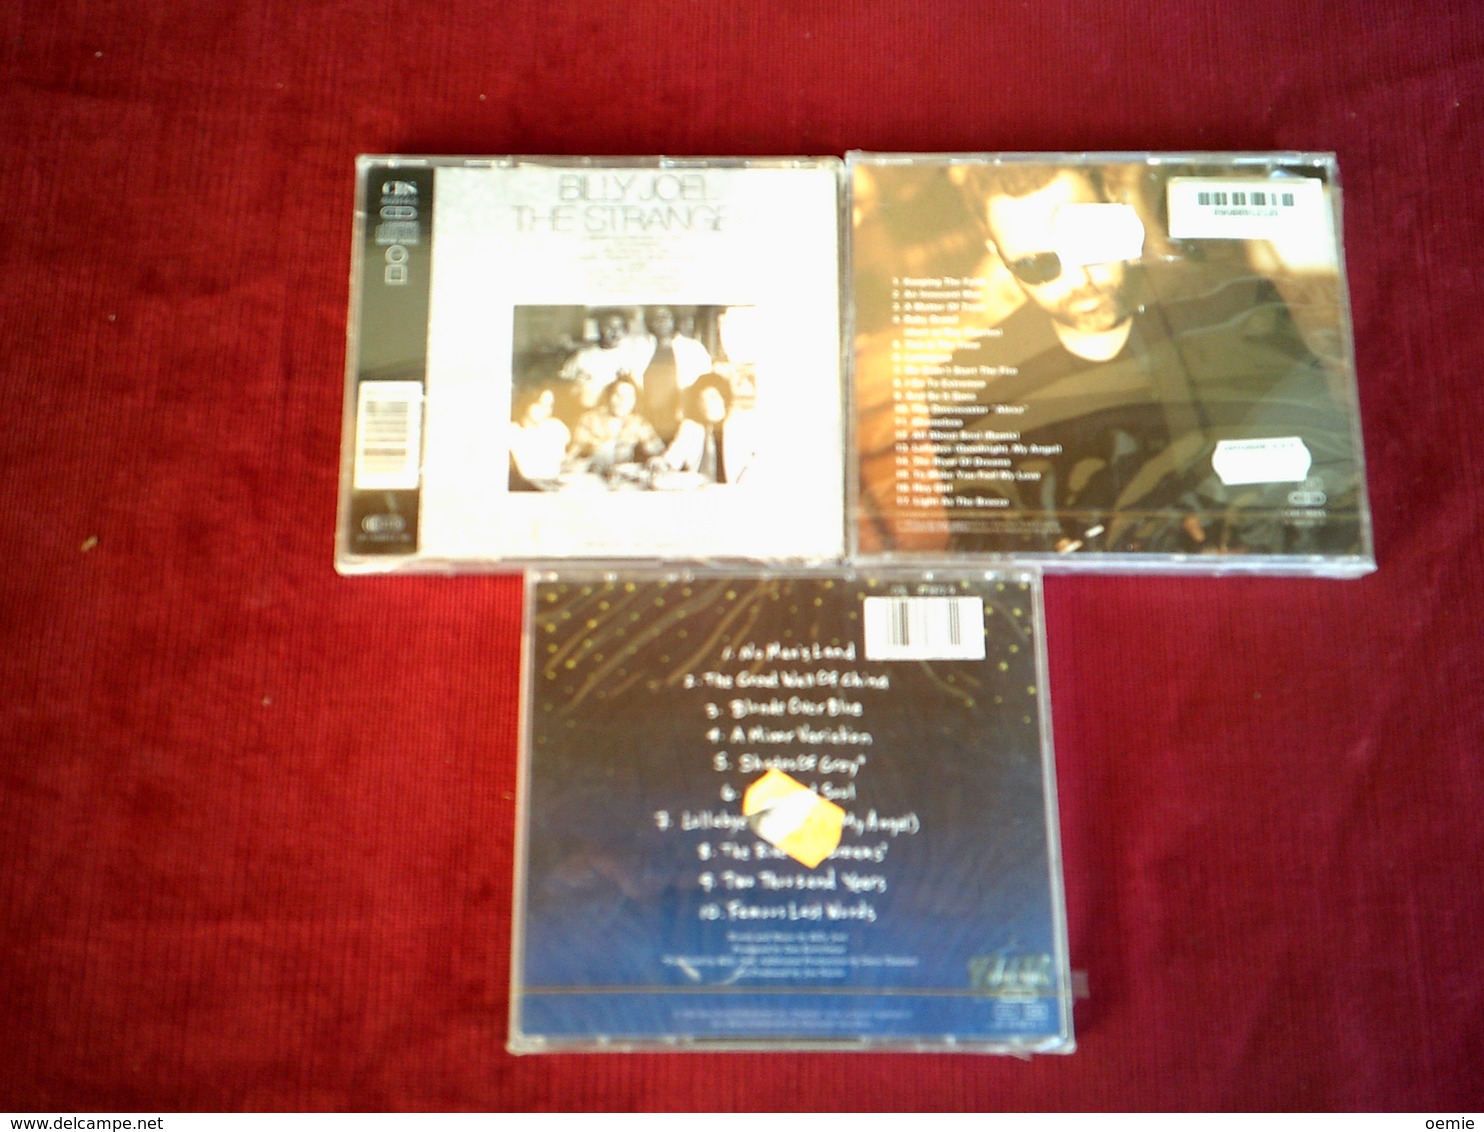 BILLY  JOEL   ° COLLECTION DE 3  CD ALBUM - Collections Complètes